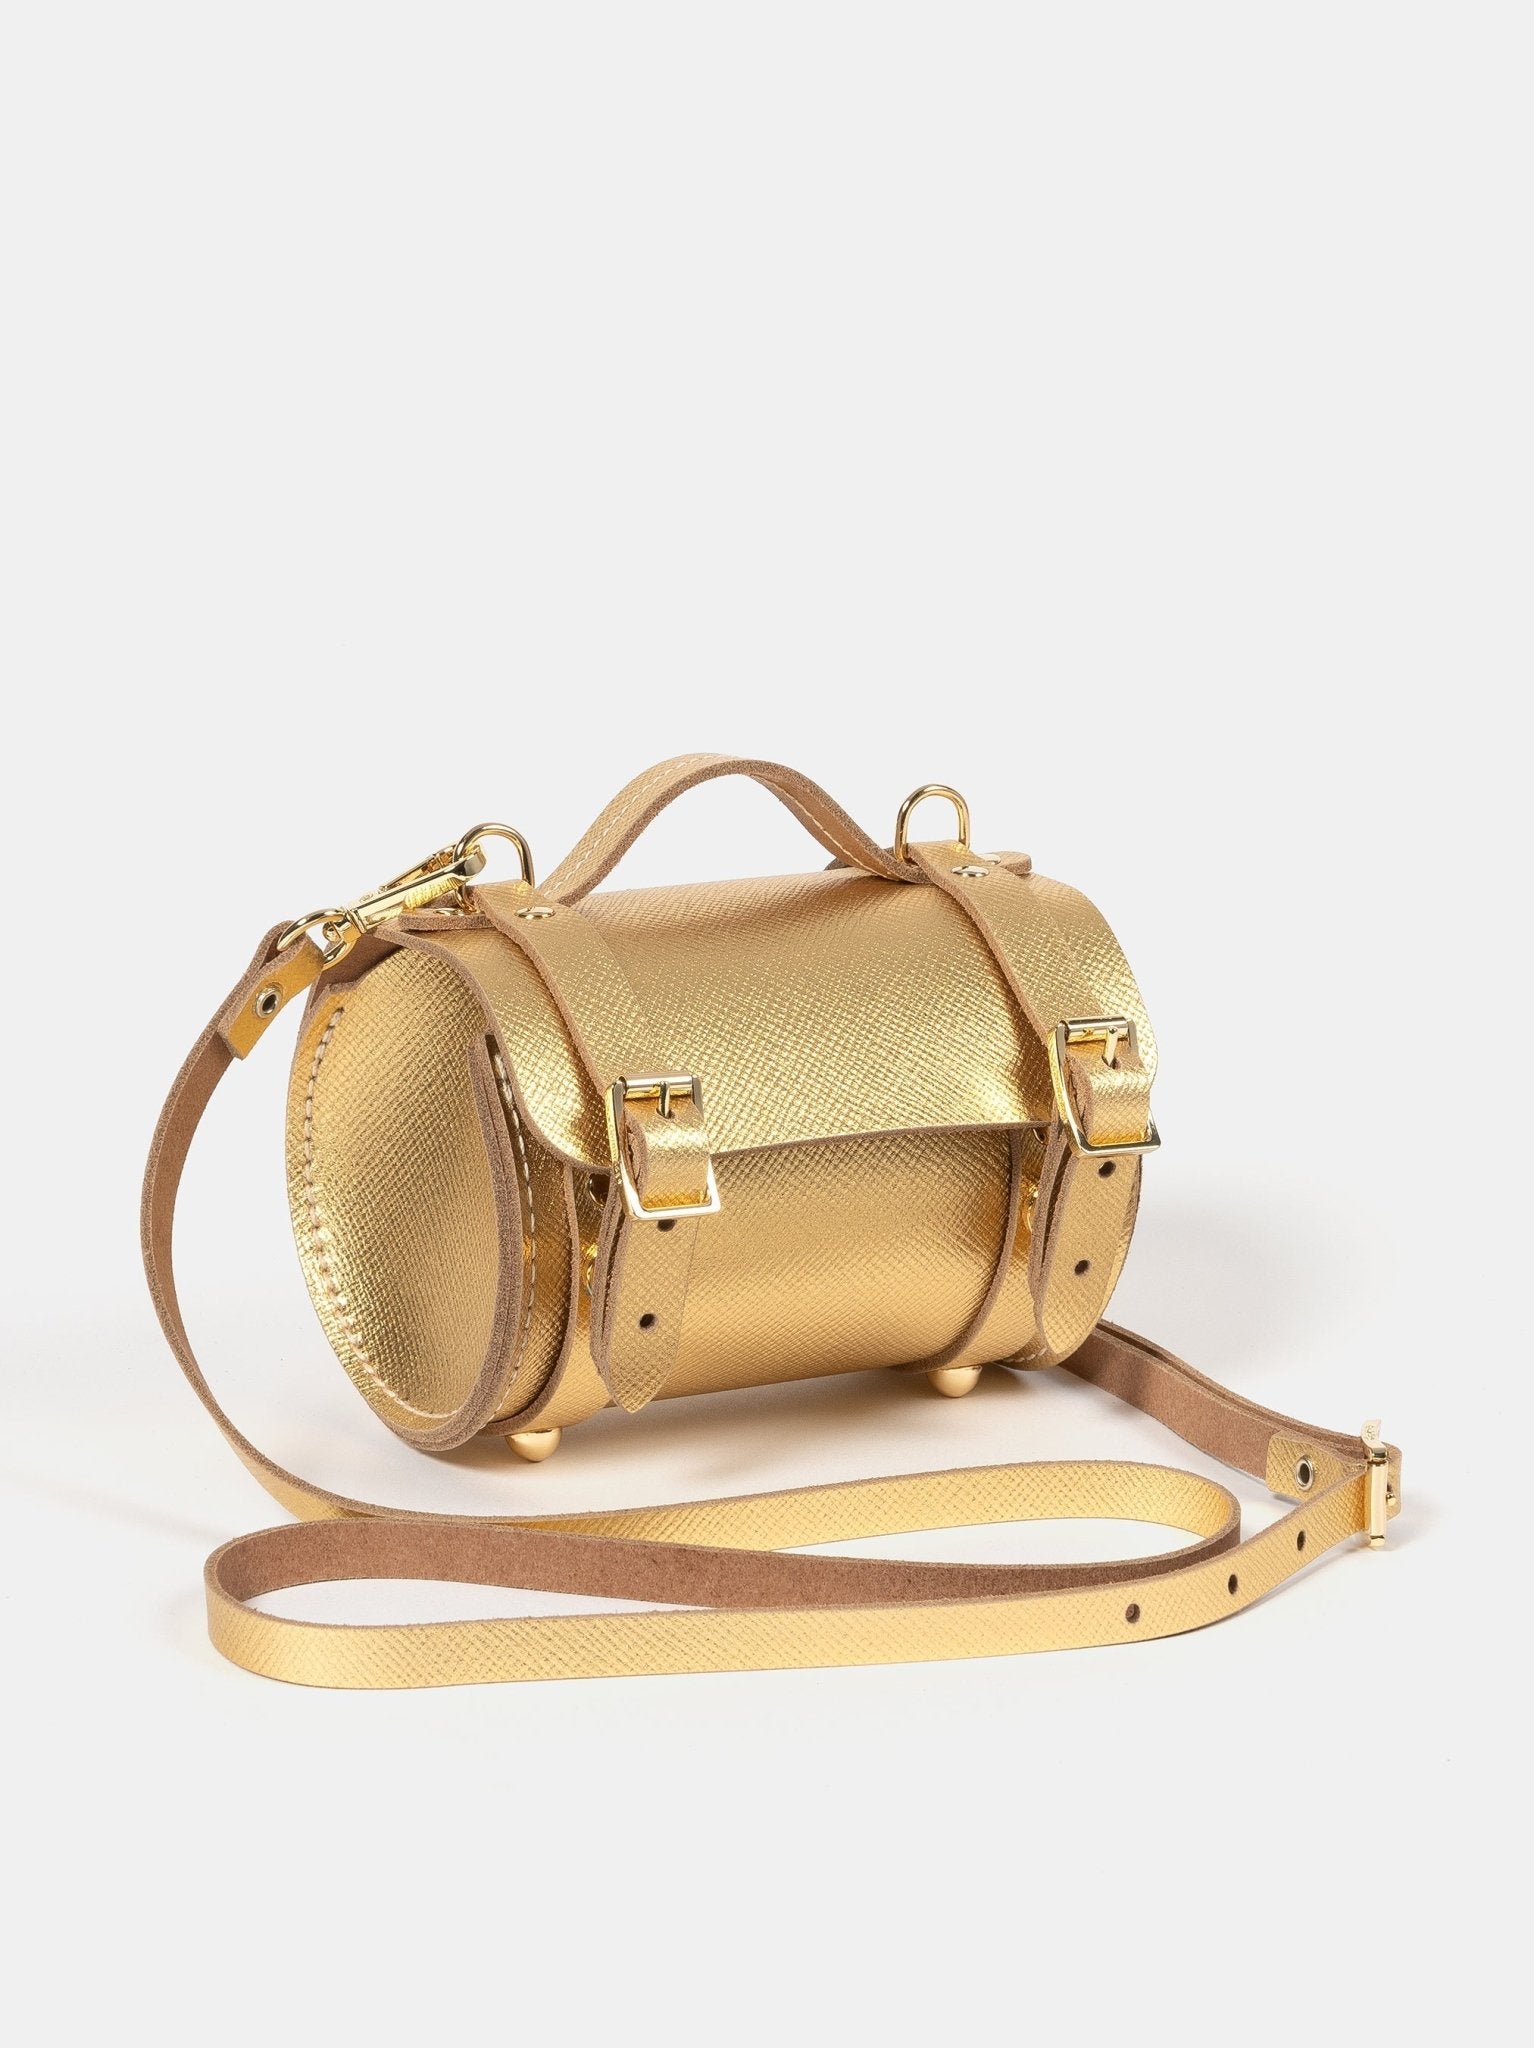 The Micro Bowls Bag - Foil Gold Saffiano - The Cambridge Satchel Company EU Store